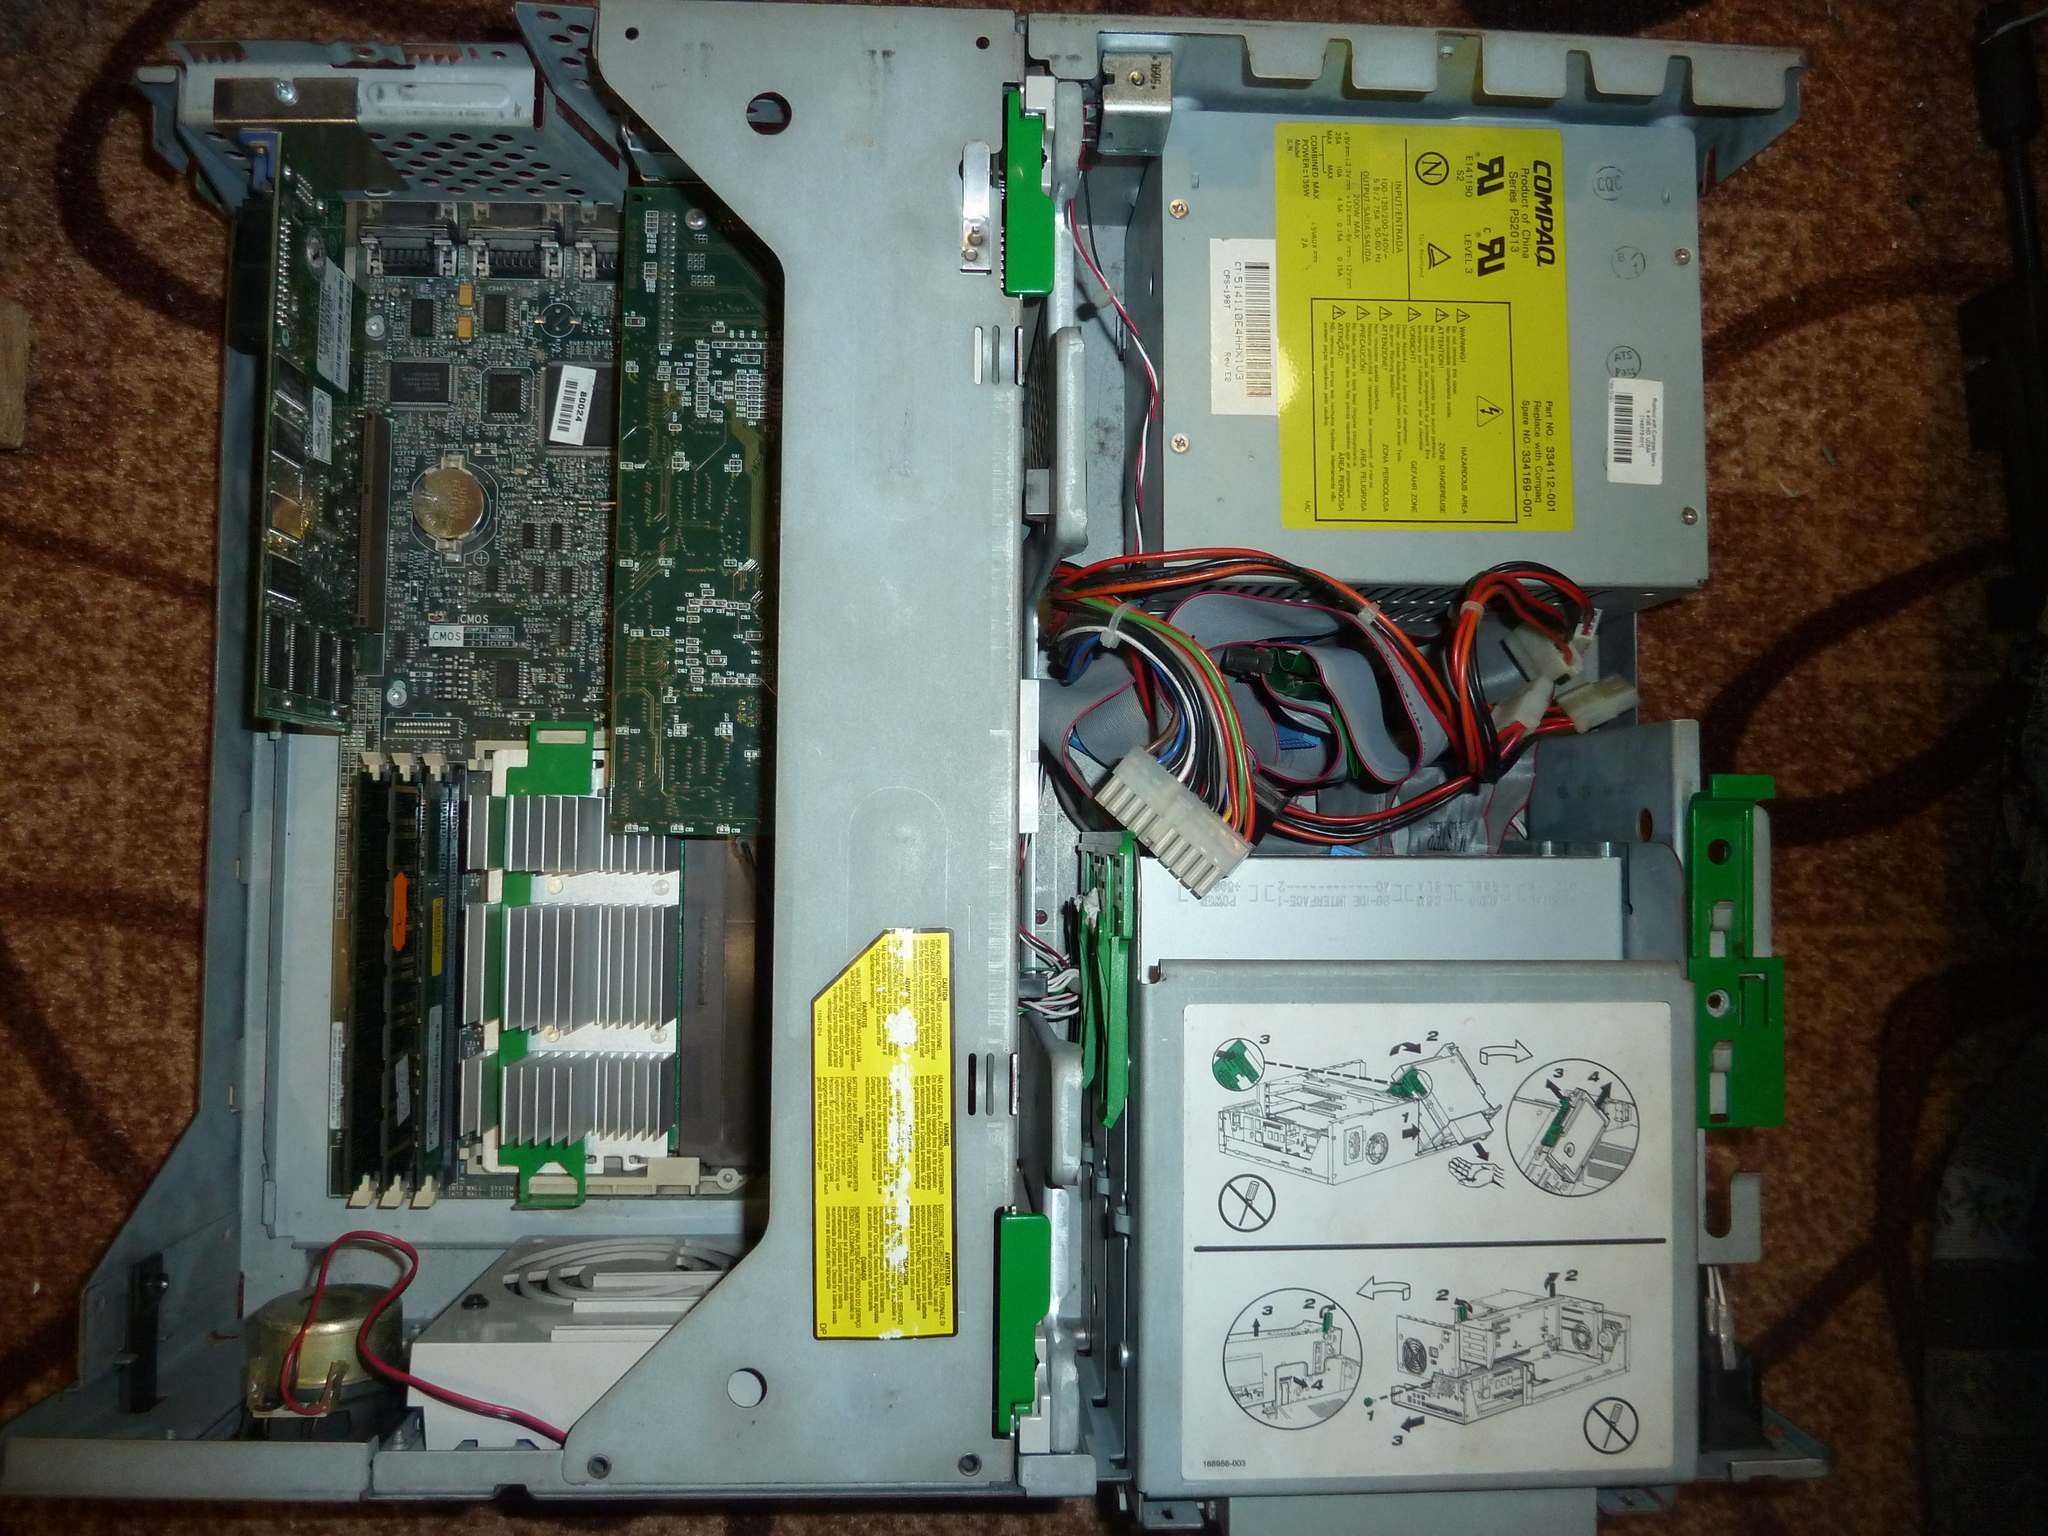 Compaq Deskpro PD1005 - My, Longpost, Compaq, Pentium 3, IT, Computer, Old iron, Old school, Voodoo2